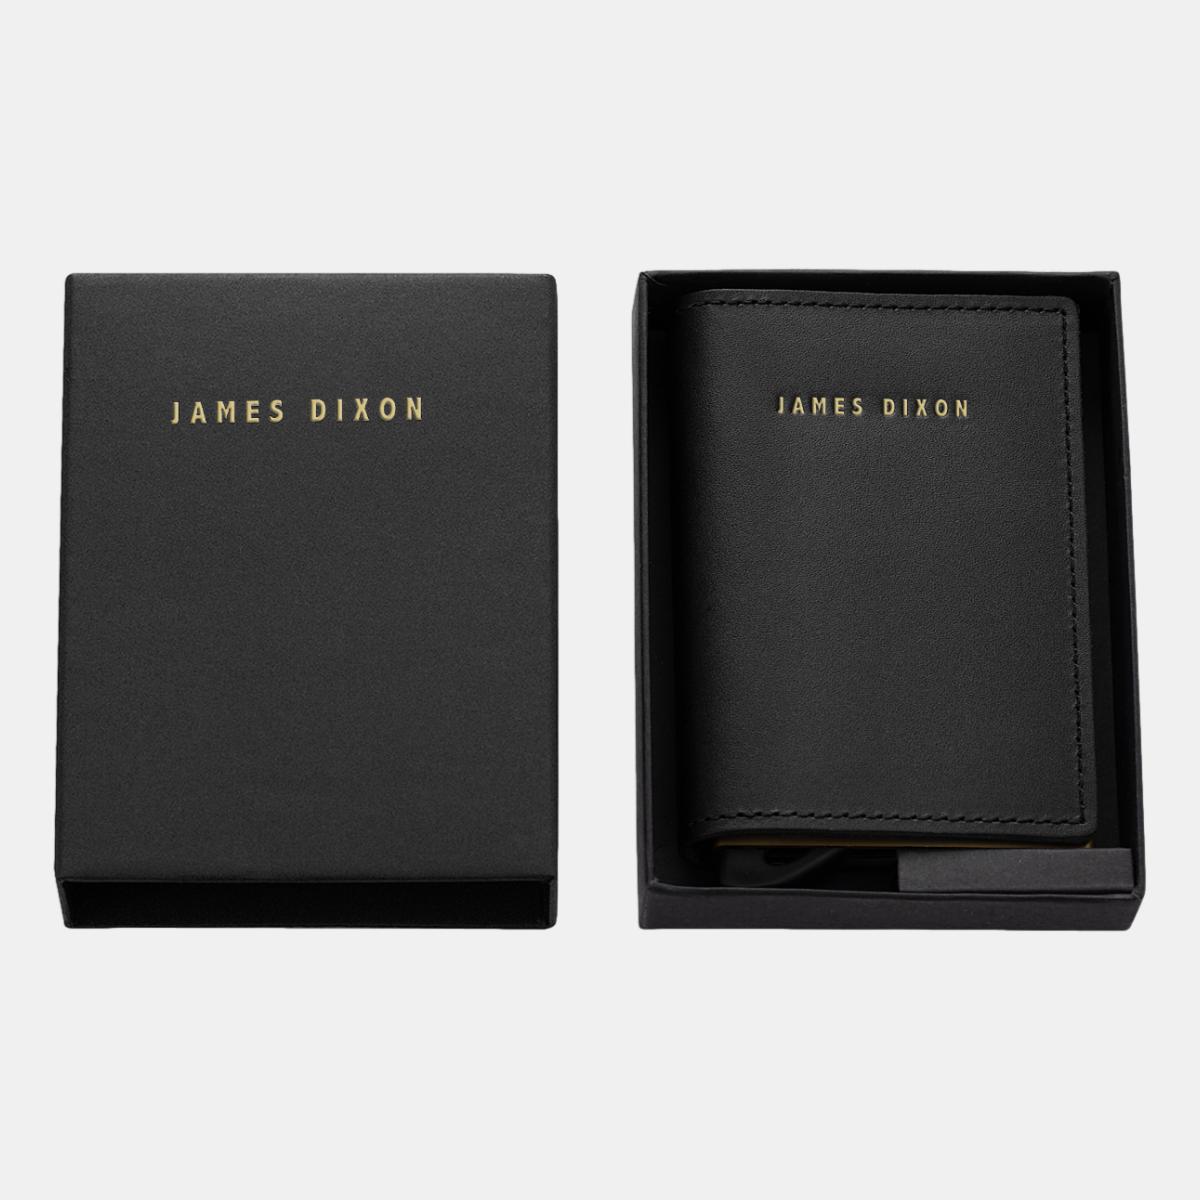 jd0022 james dixon puro one black gold wallet box